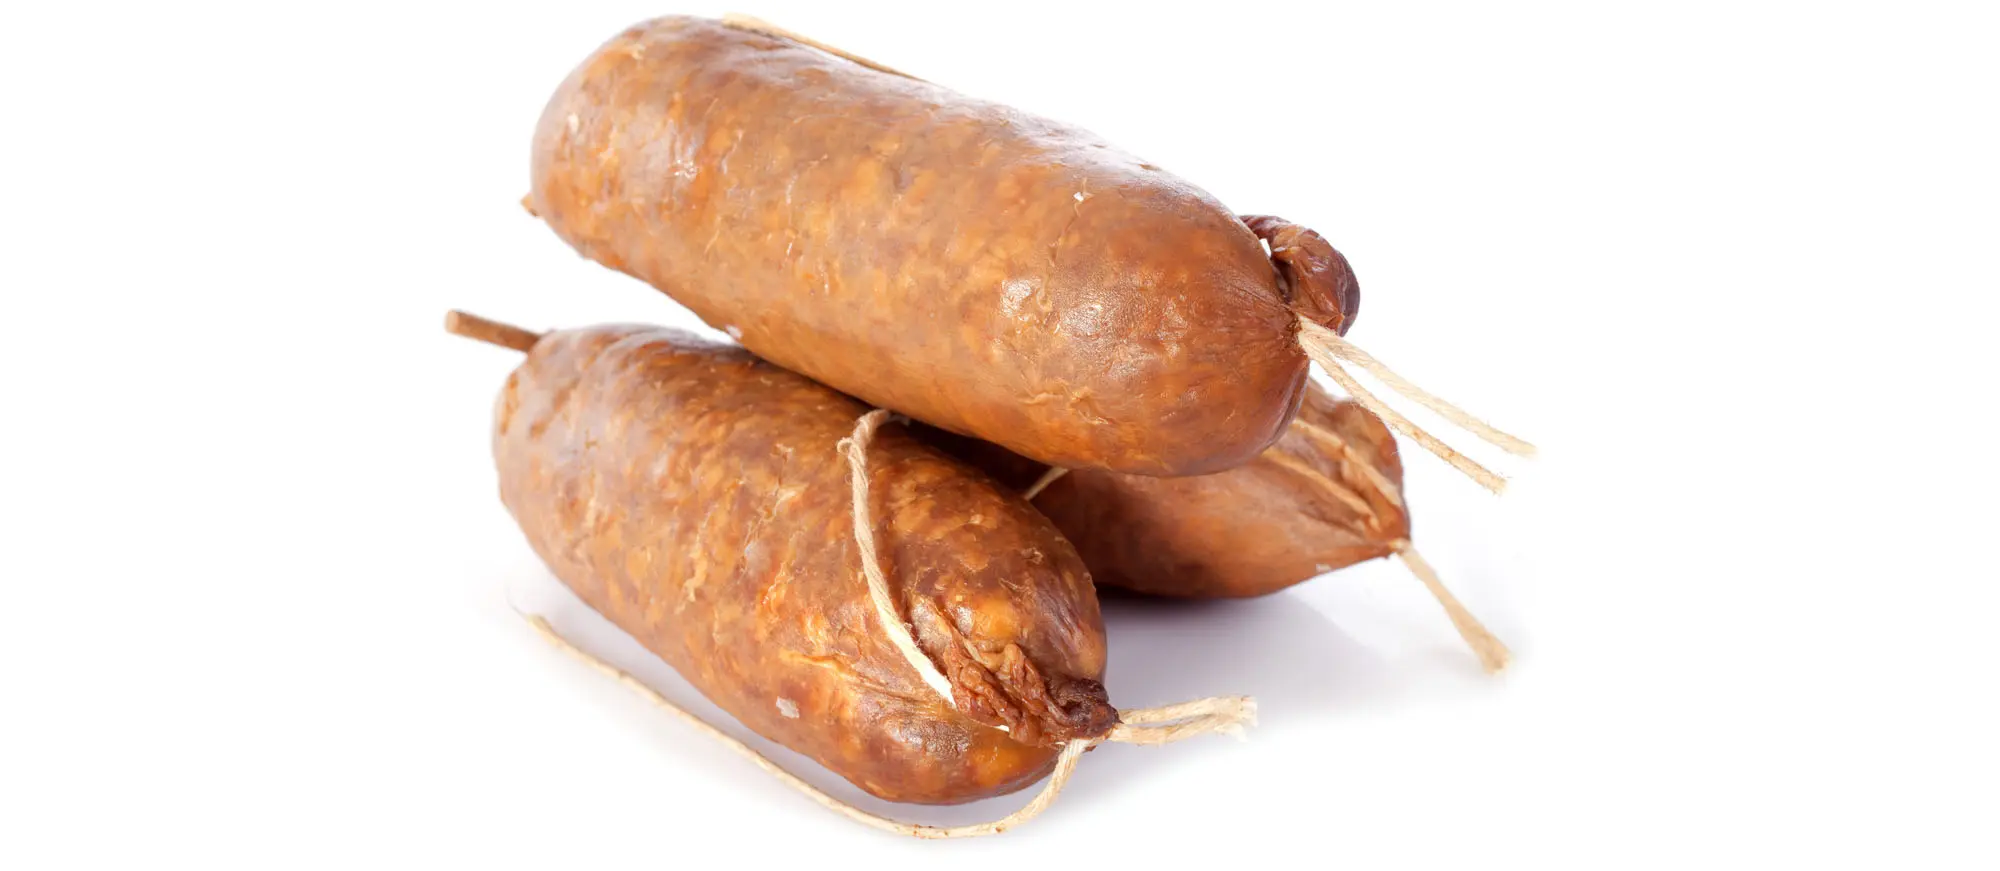 smoked morteau sausage - What is equivalent to Morteau sausage